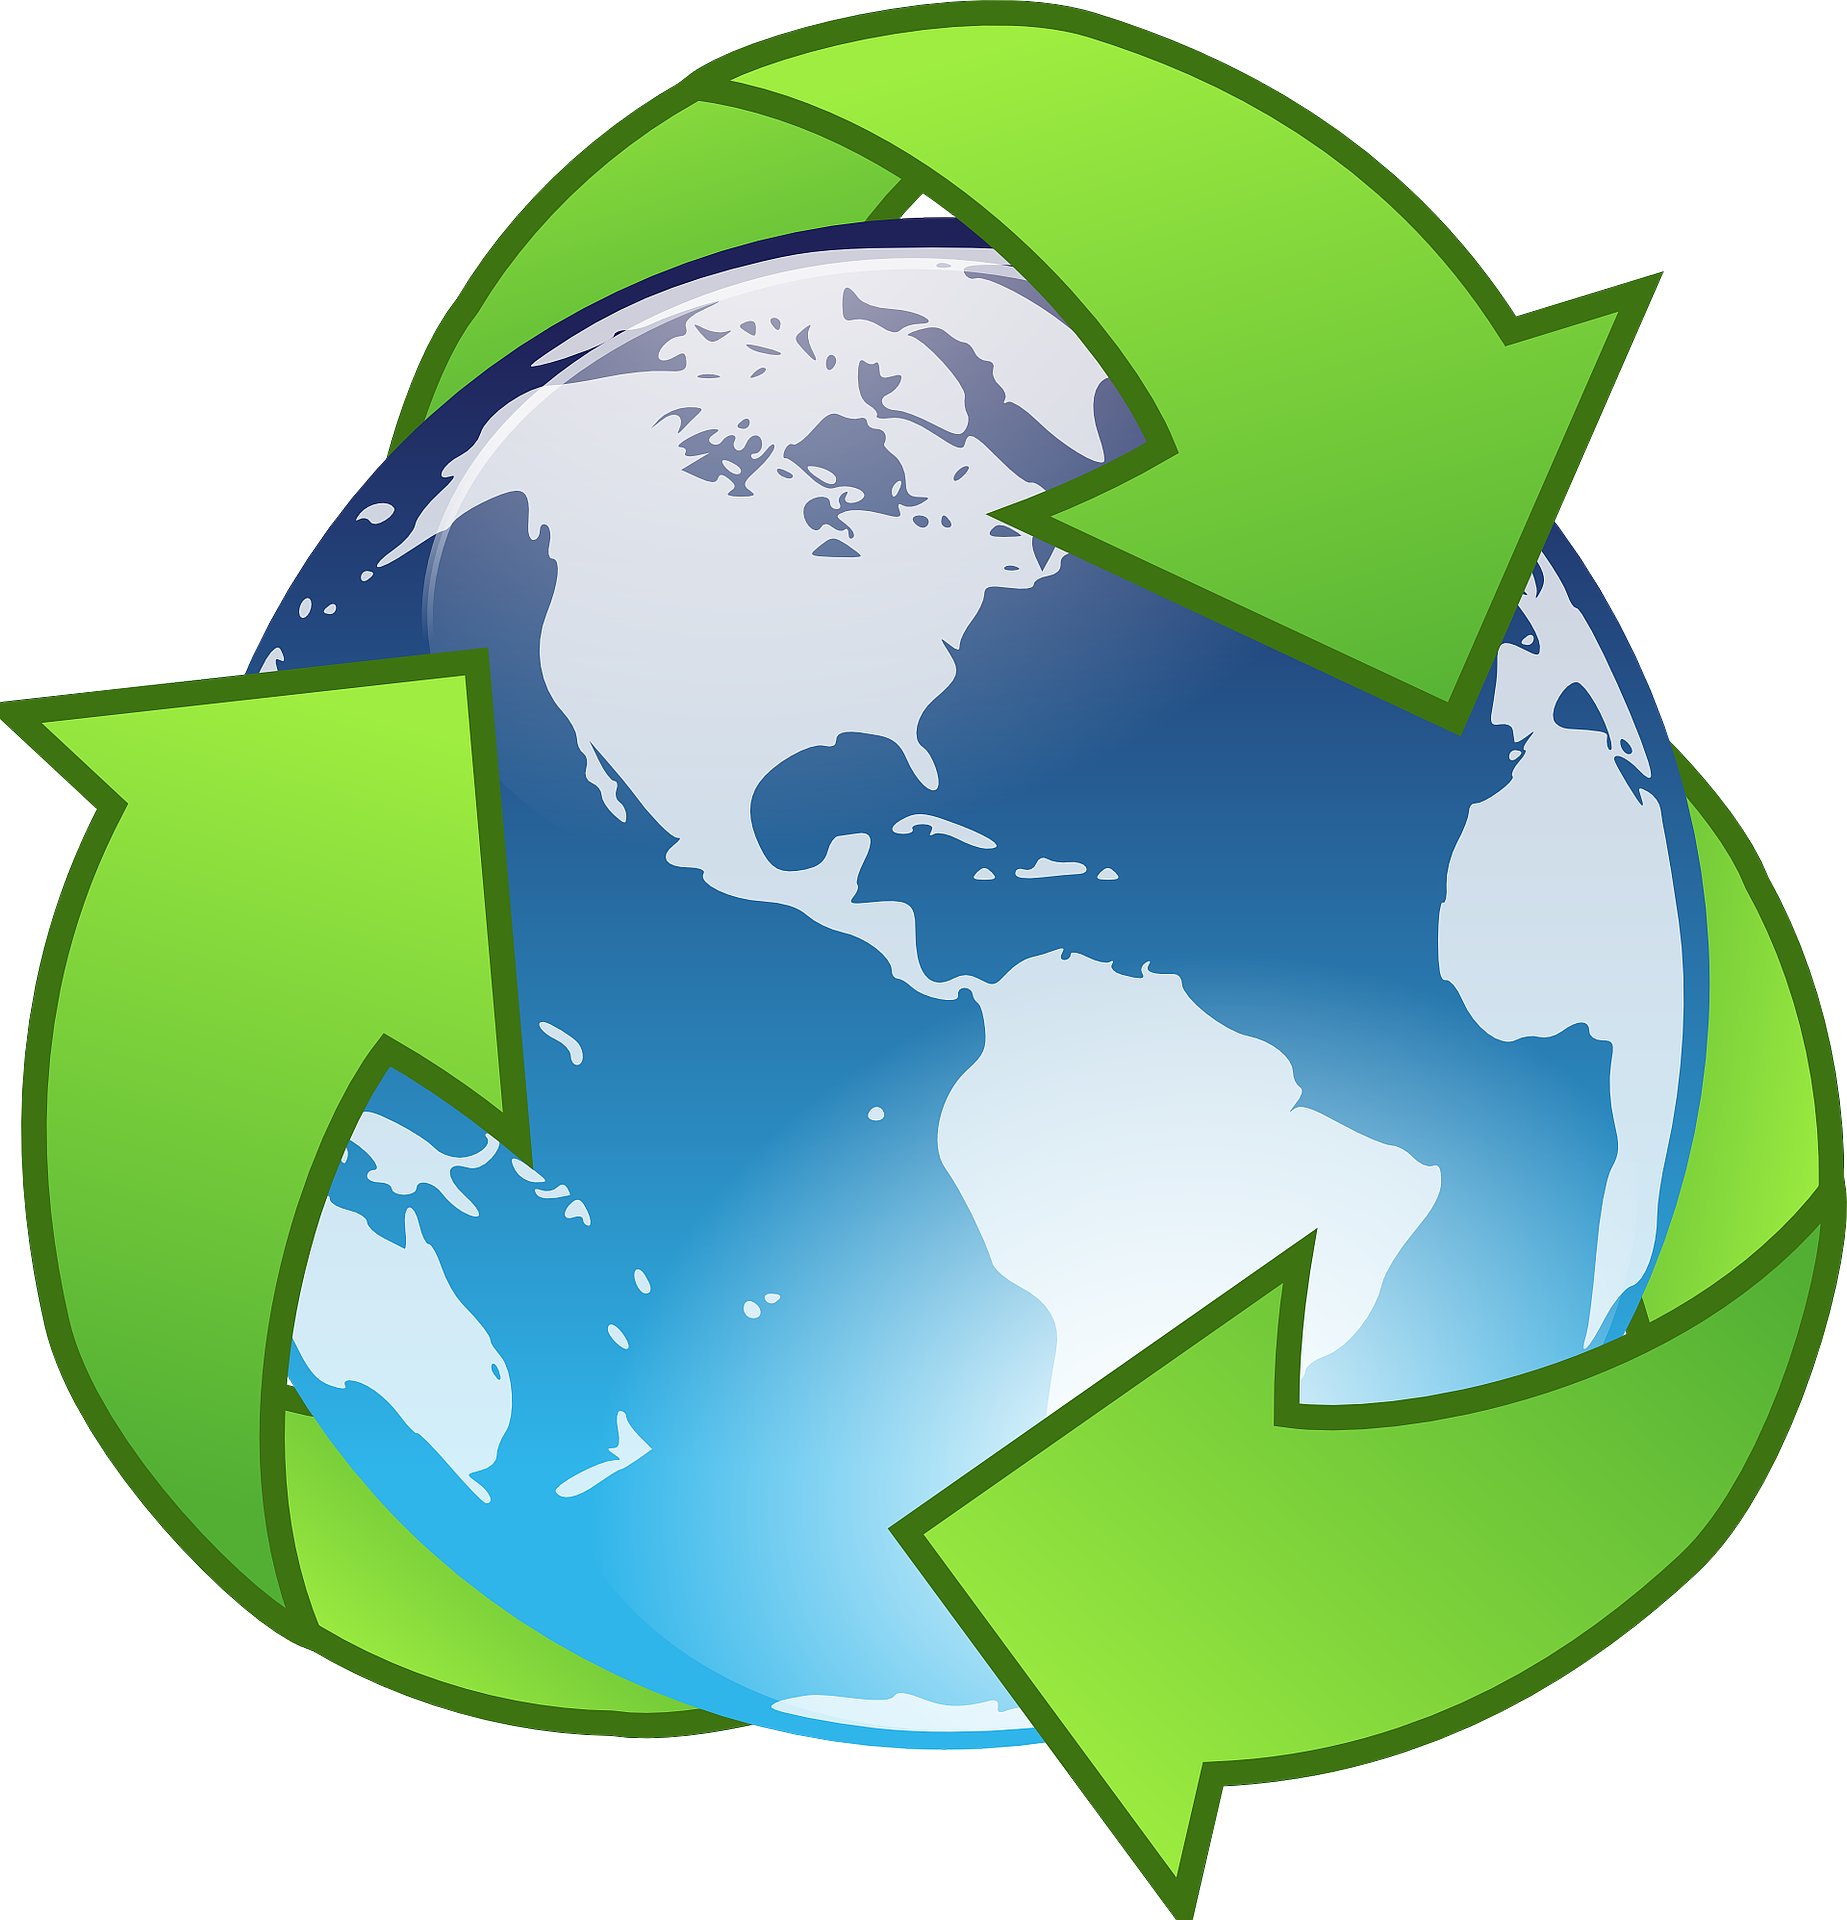 Recycling in the U.S. Is Broken. How Do We Fix It?